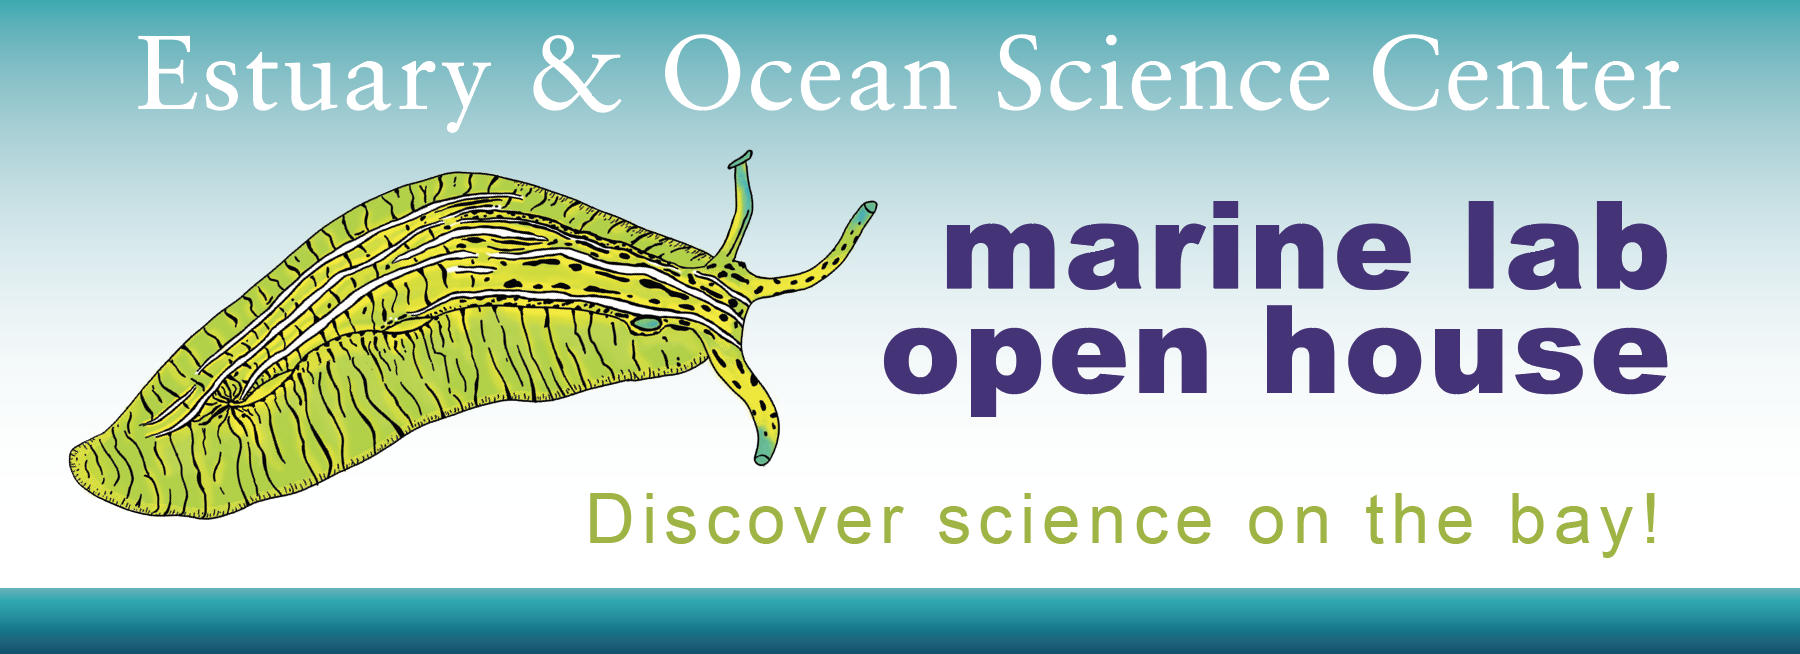 marine lab open house